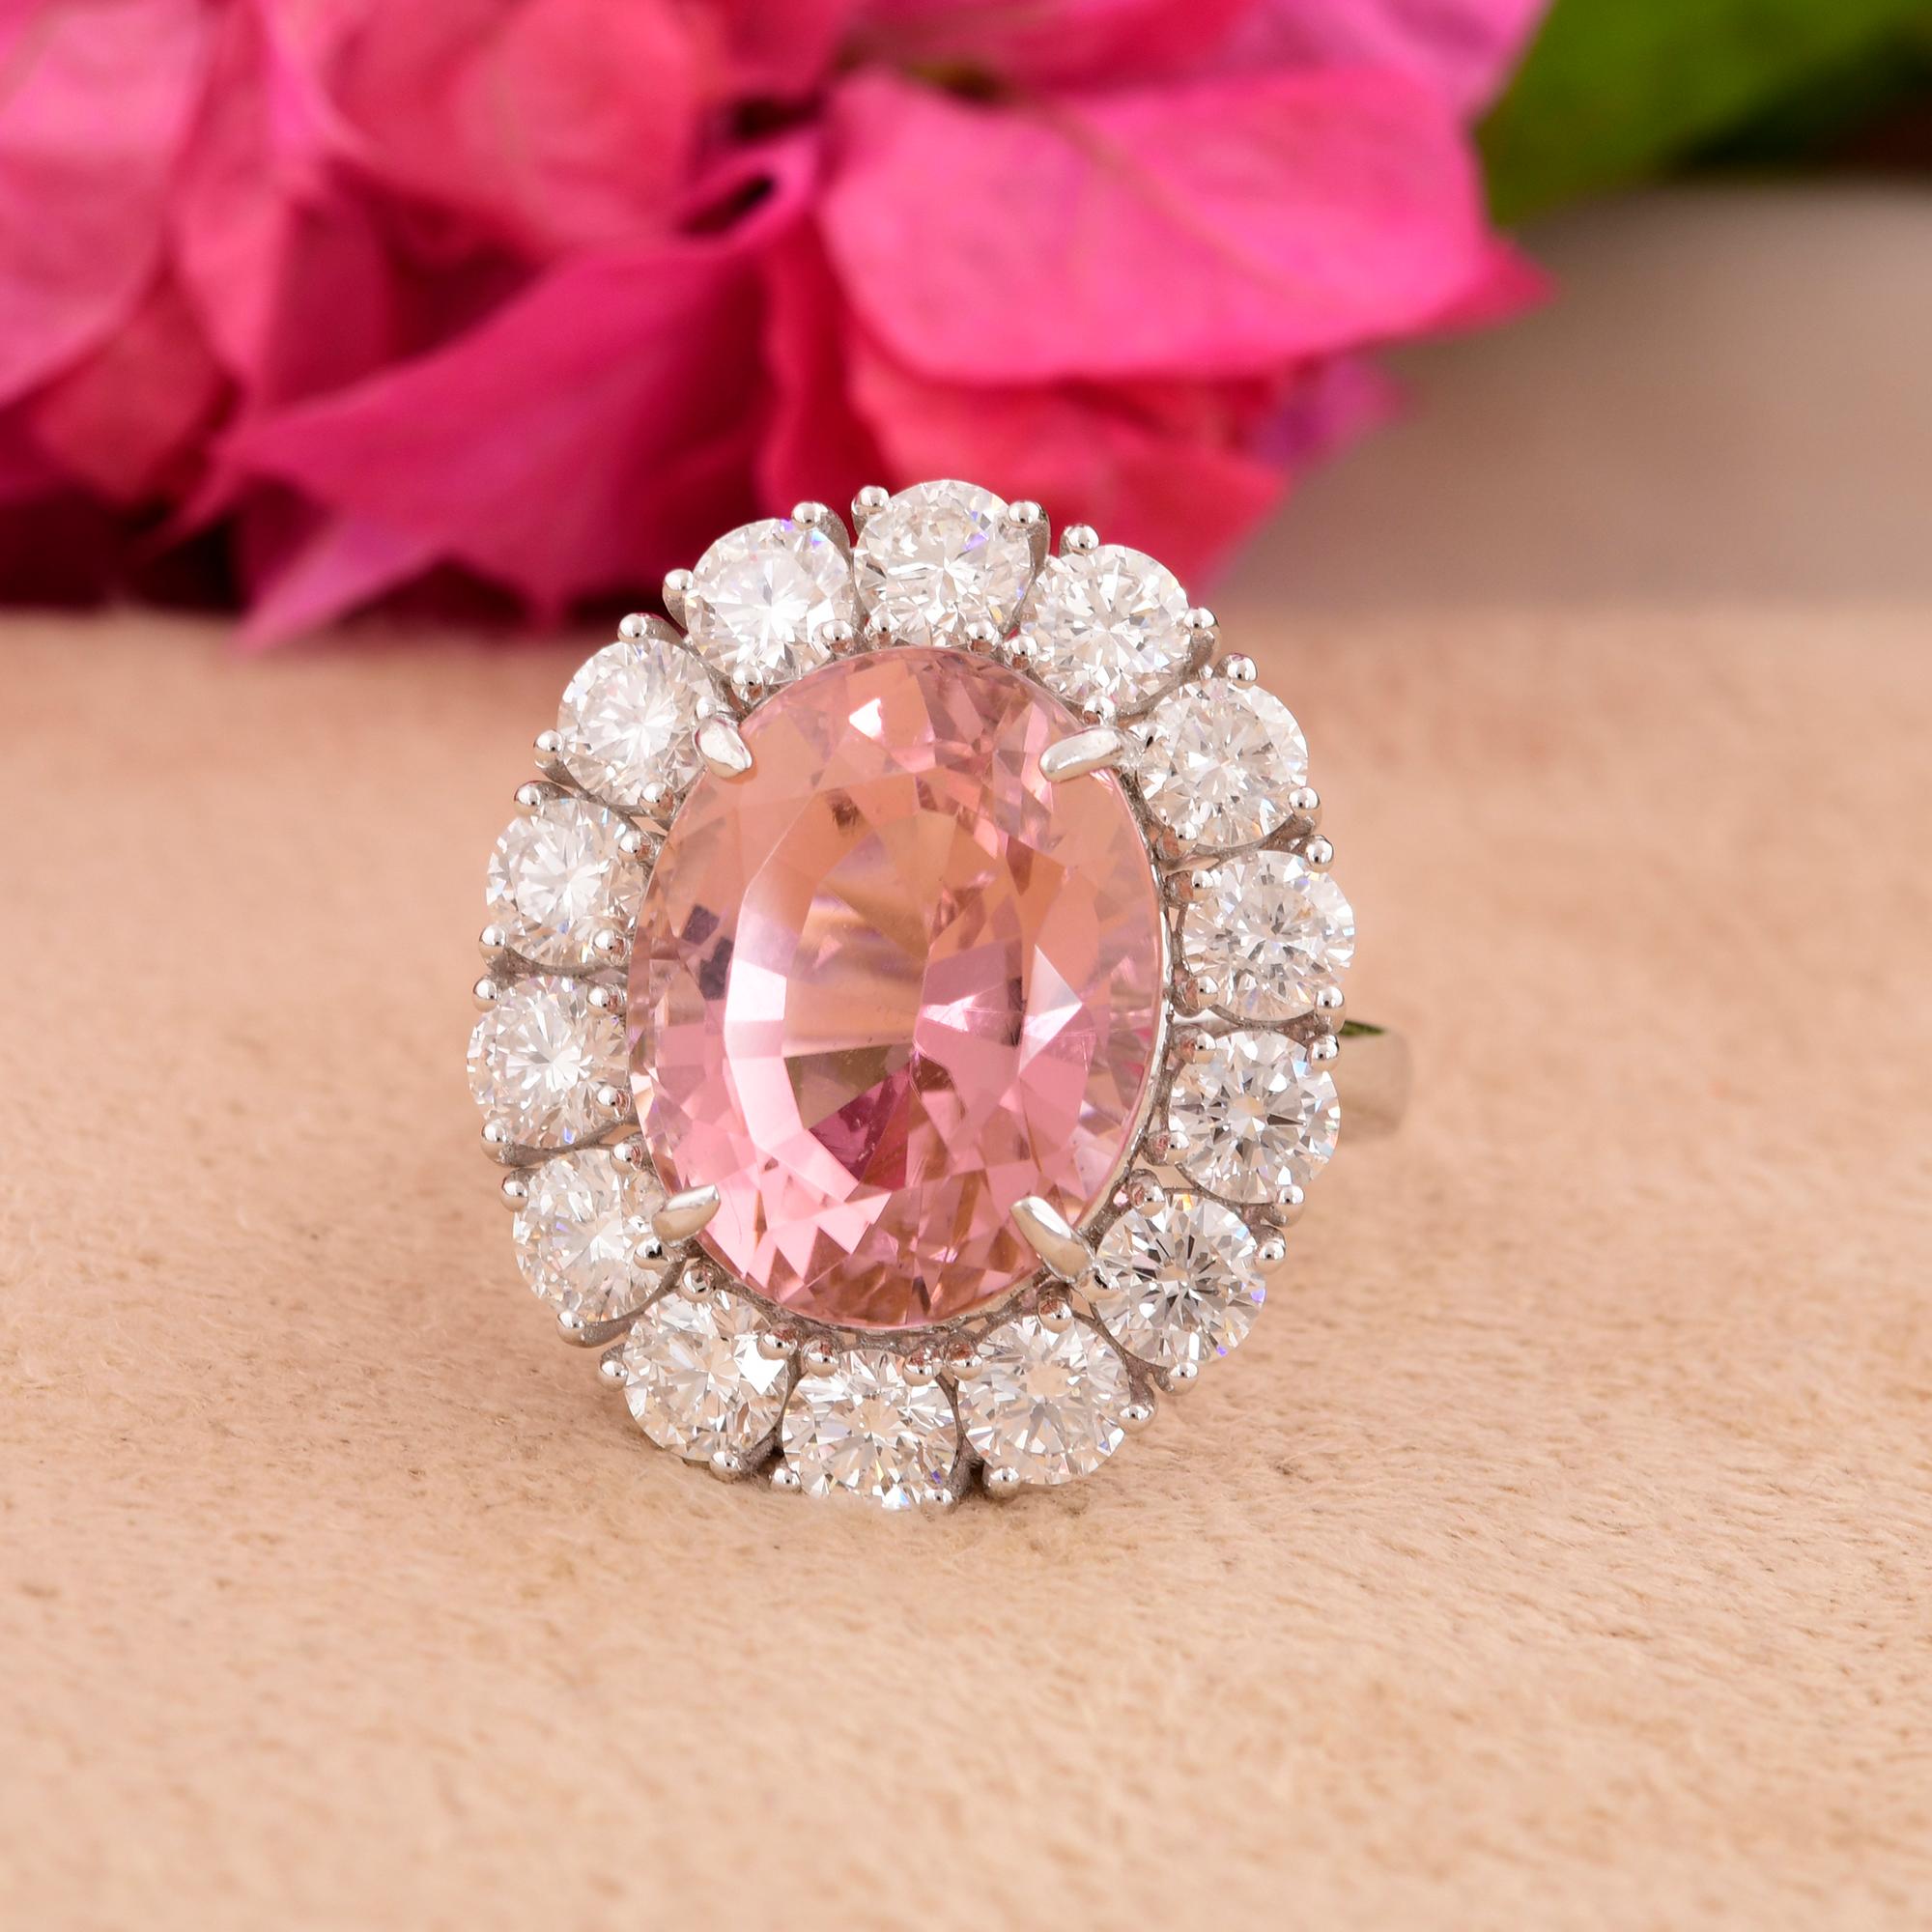 Oval Cut Oval Pink Tourmaline Gemstone Cocktail Ring Diamond 18 Karat White Gold Jewelry For Sale